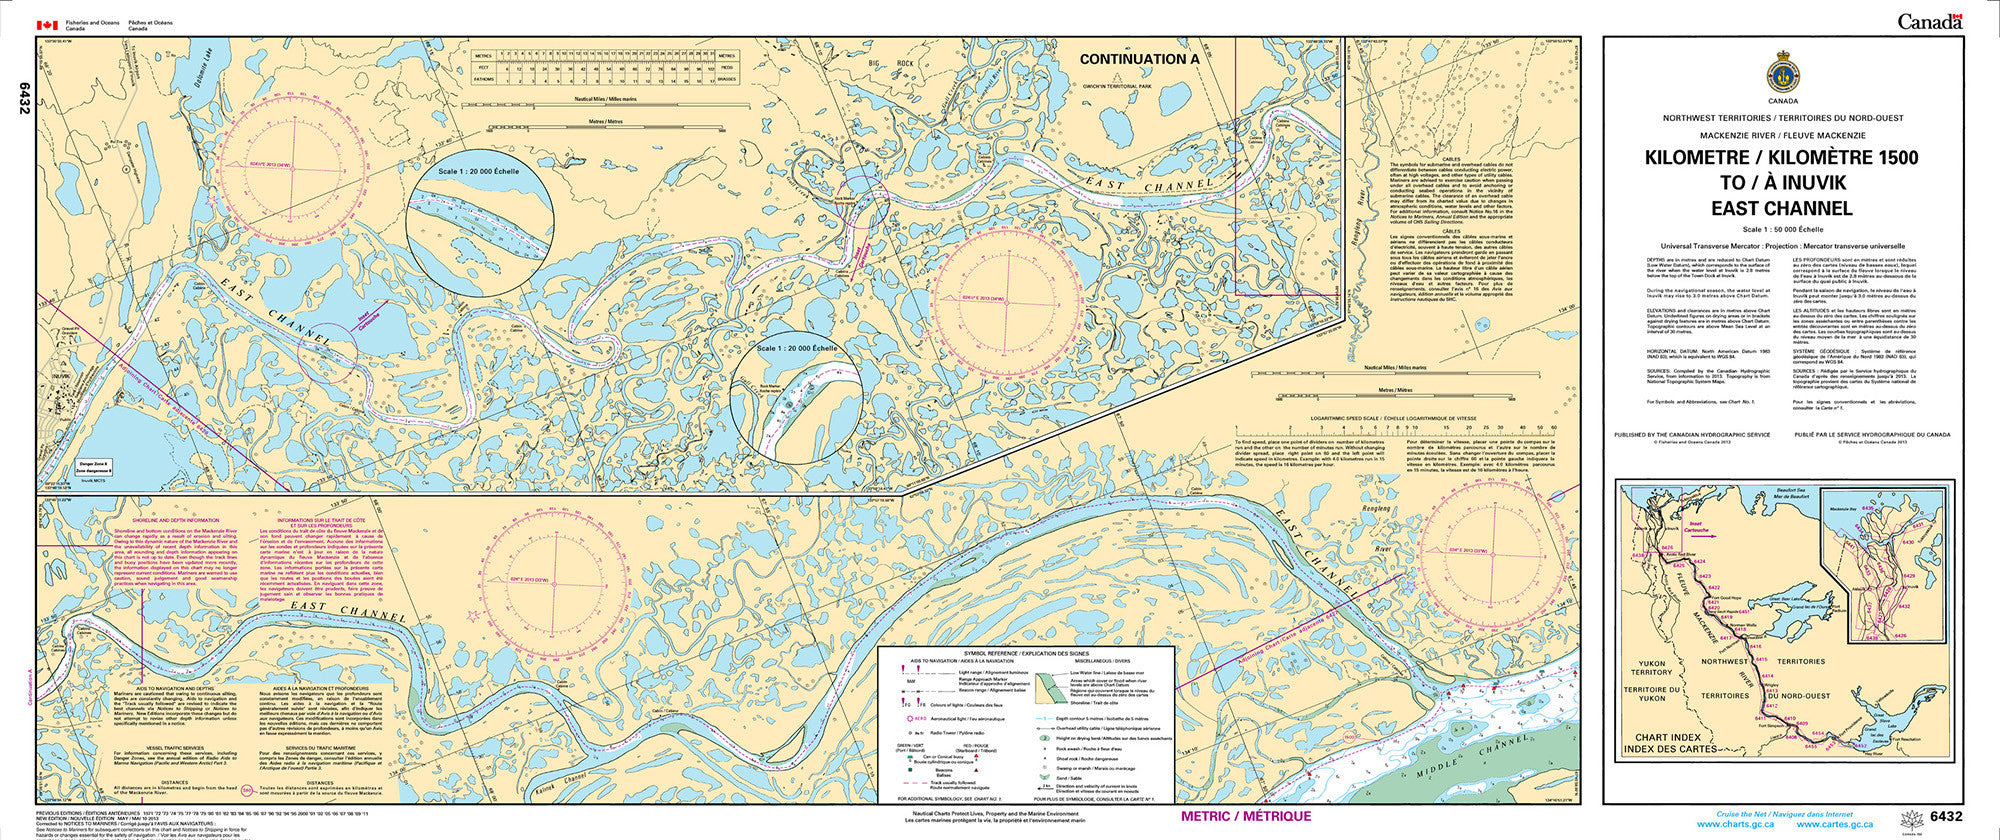 Canadian Hydrographic Service Nautical Chart CHS6432: Kilometre/Kilomètre 1500 to/à Inuvik East Channel